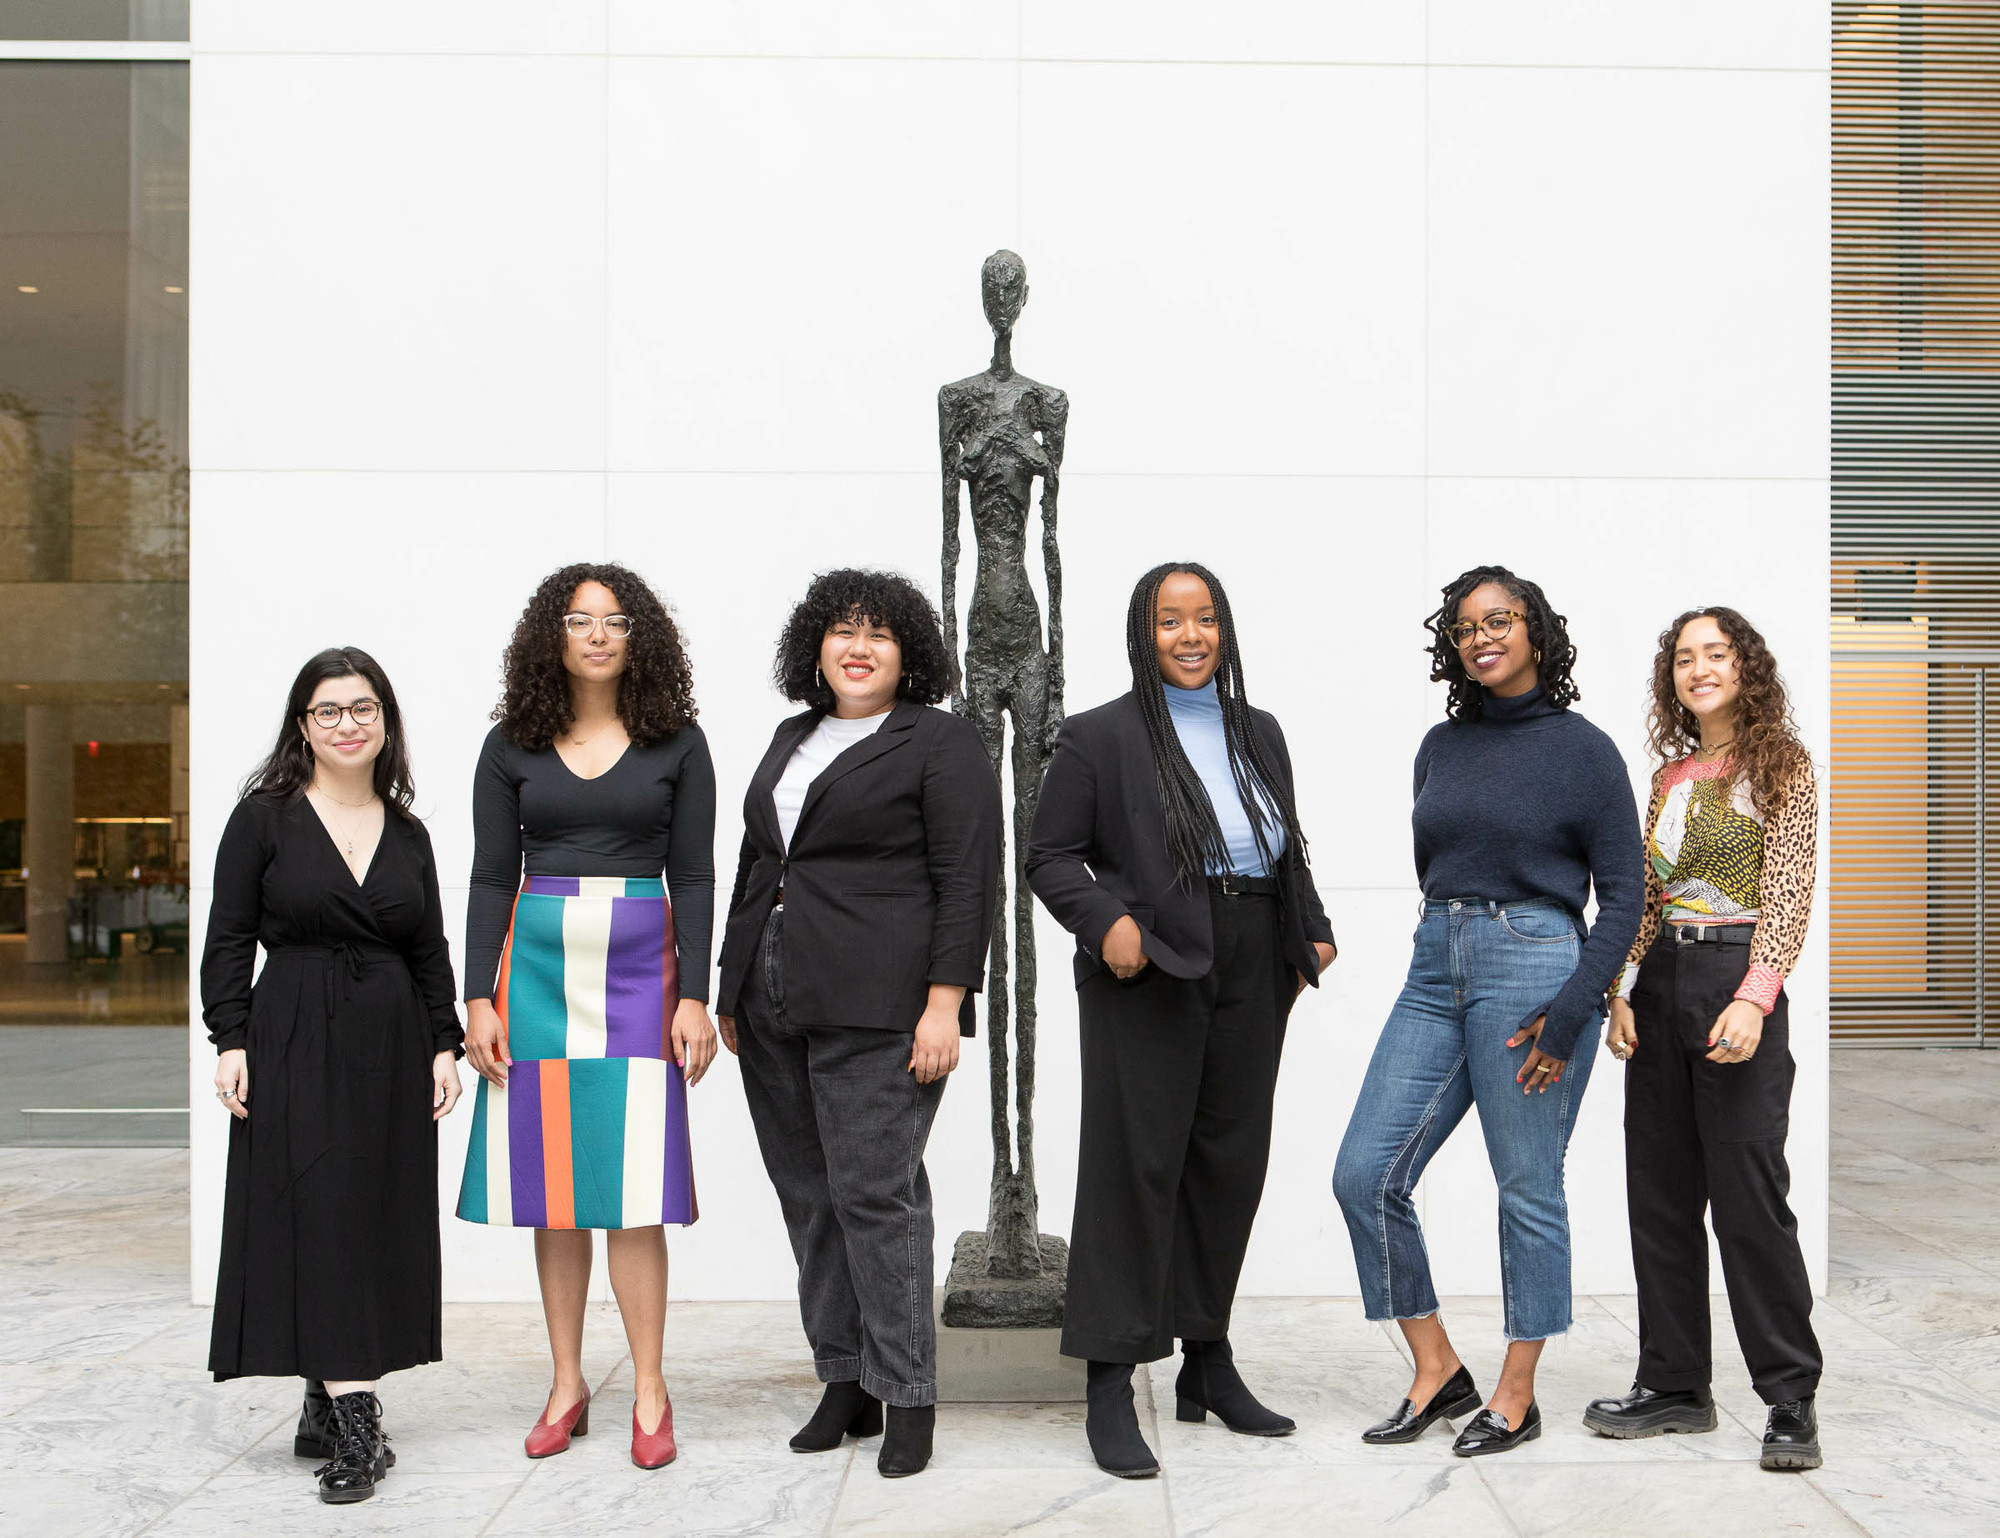 2019–21 MoMA/Studio Museum Fellows are Zuna Maza, Jordan Jones, Isabelle Hui Saldaña, Makayla Bailey, Ravon Ruffin, and Angelique Rosales Salgado